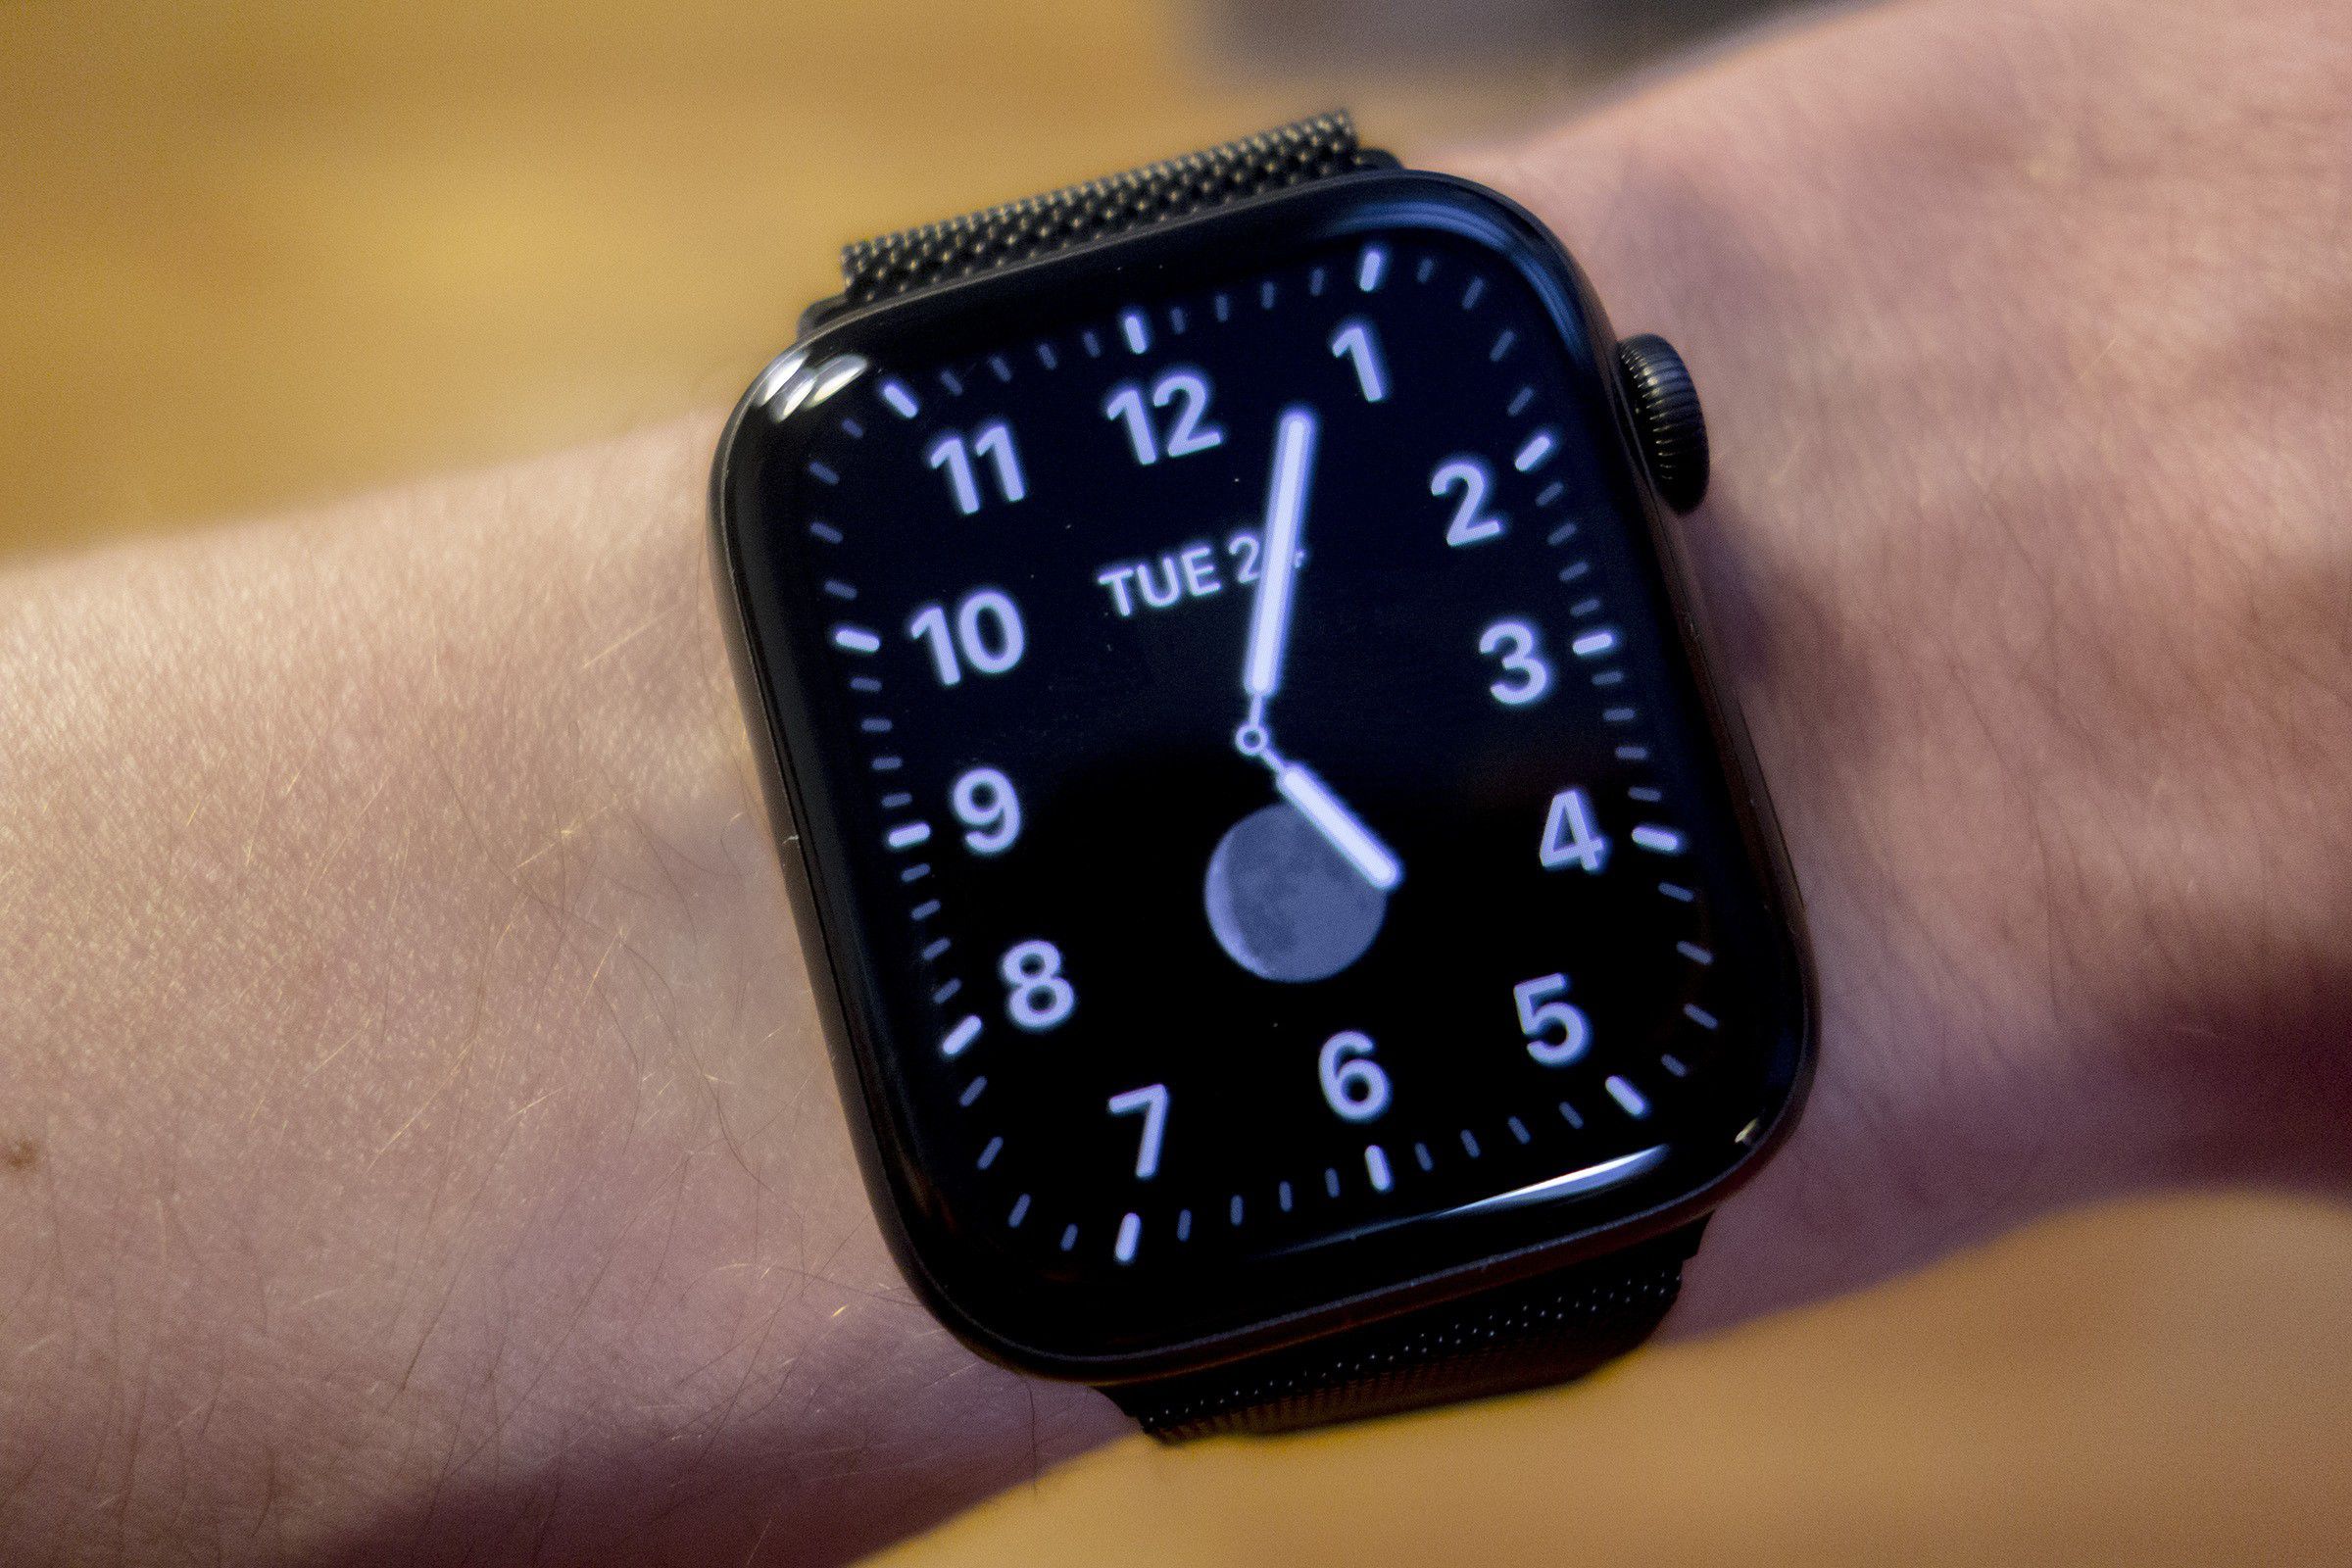 Циферблат watch 5 pro. Watchface Apple watch 7. Циферблат Эппл вотч 7. Циферблат АПЛ вотч 7. Циферблаты Apple watch Series 7.